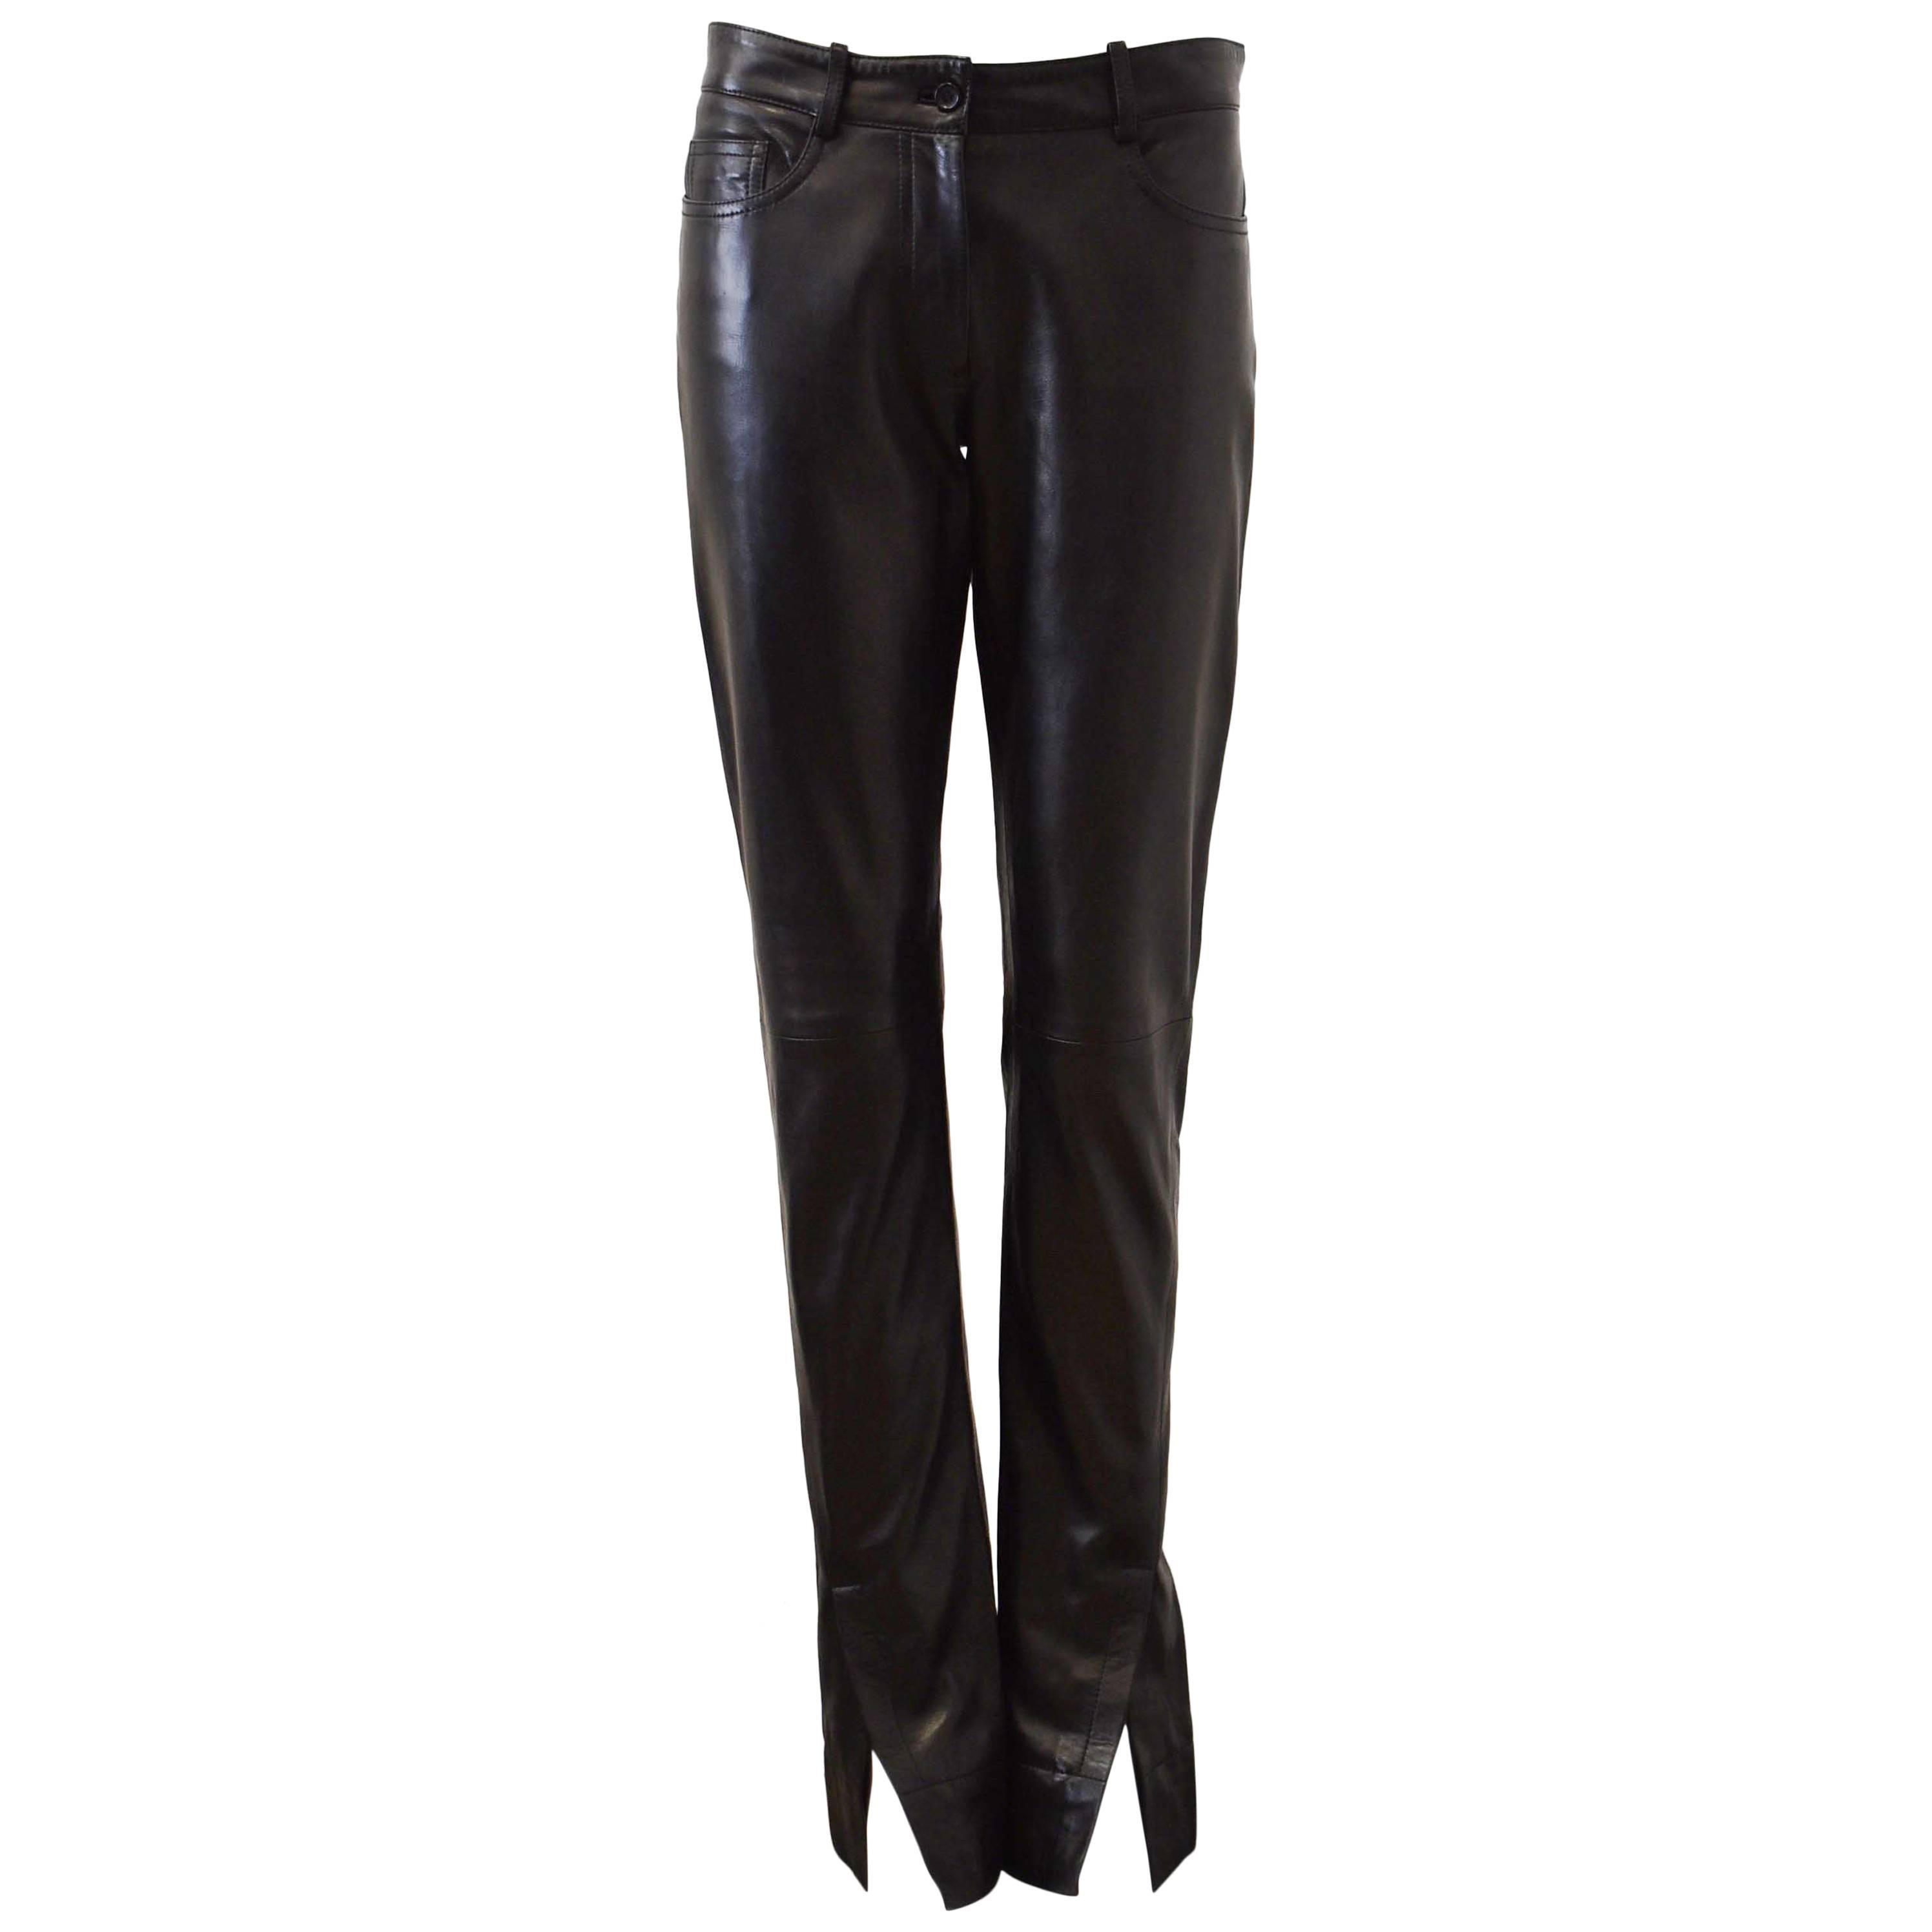 Celine Soft Black Leather Trousers with Side Slit Details